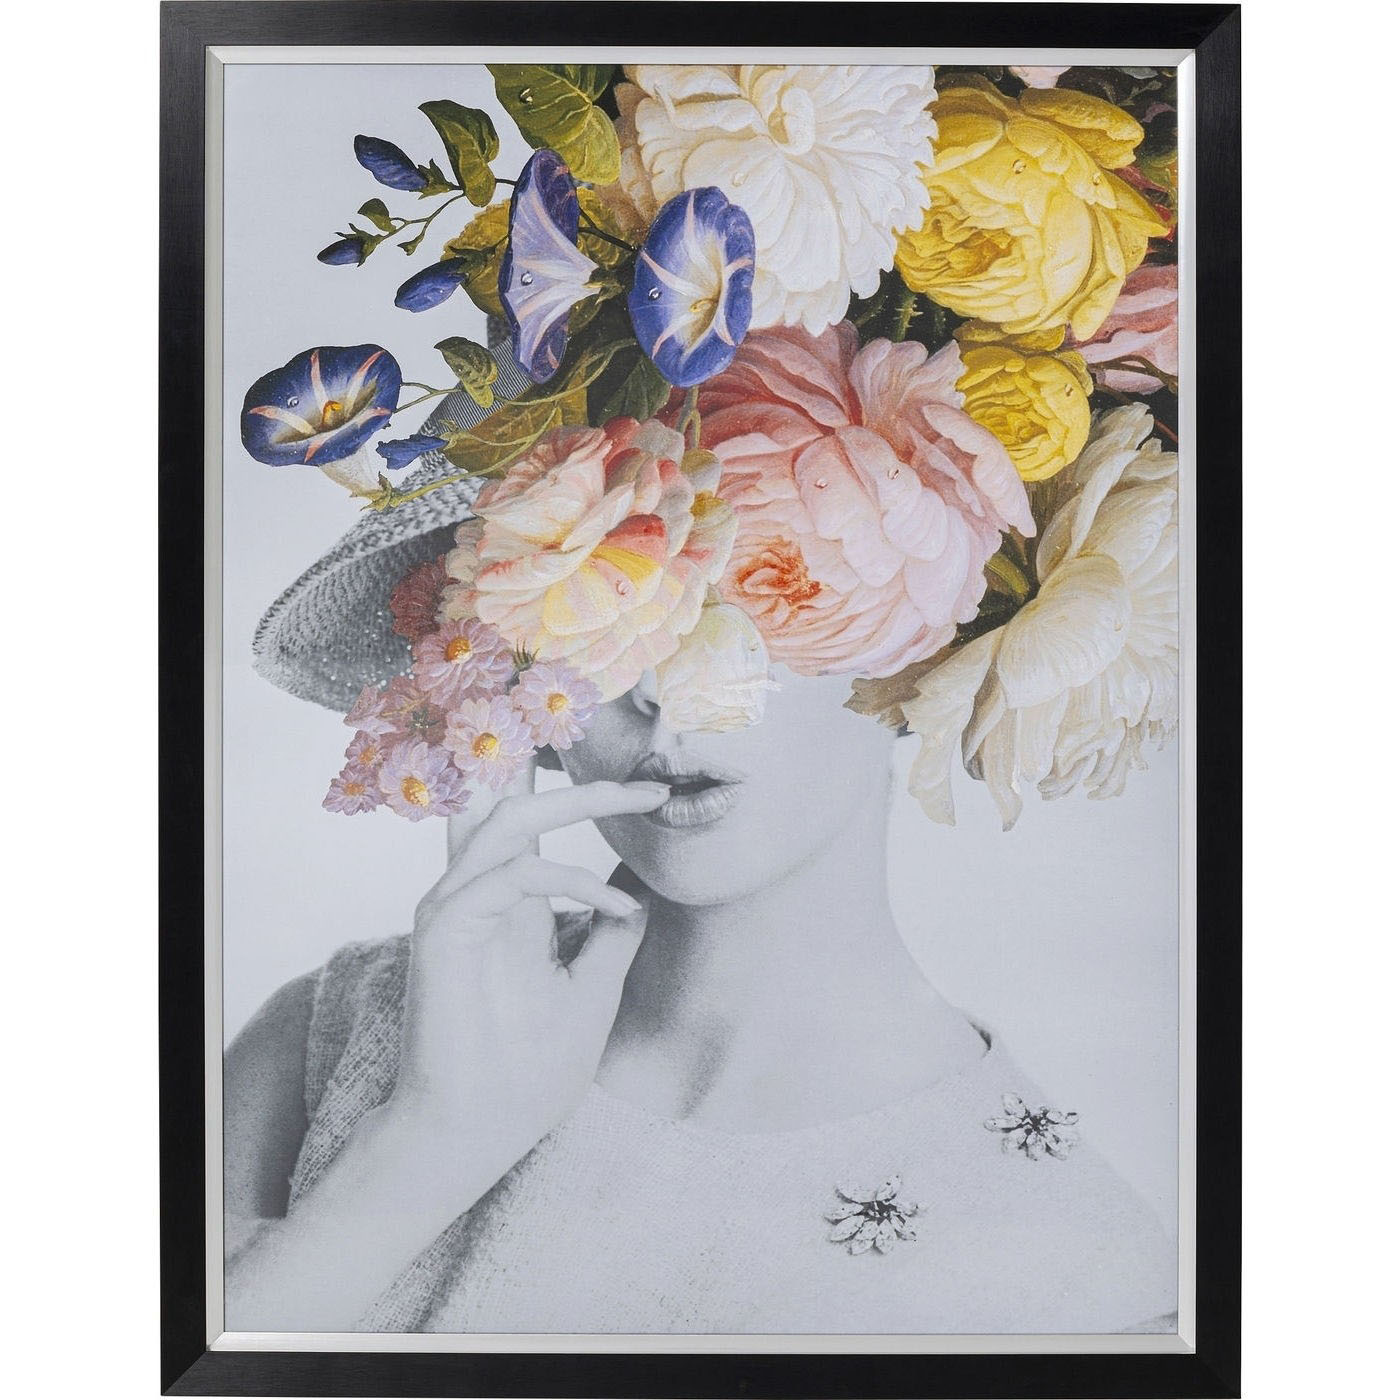 KARE DESIGN Flower Lady billede - multifarvet/klar kunstpapir/glas og polyresin, rektangulær 152x117